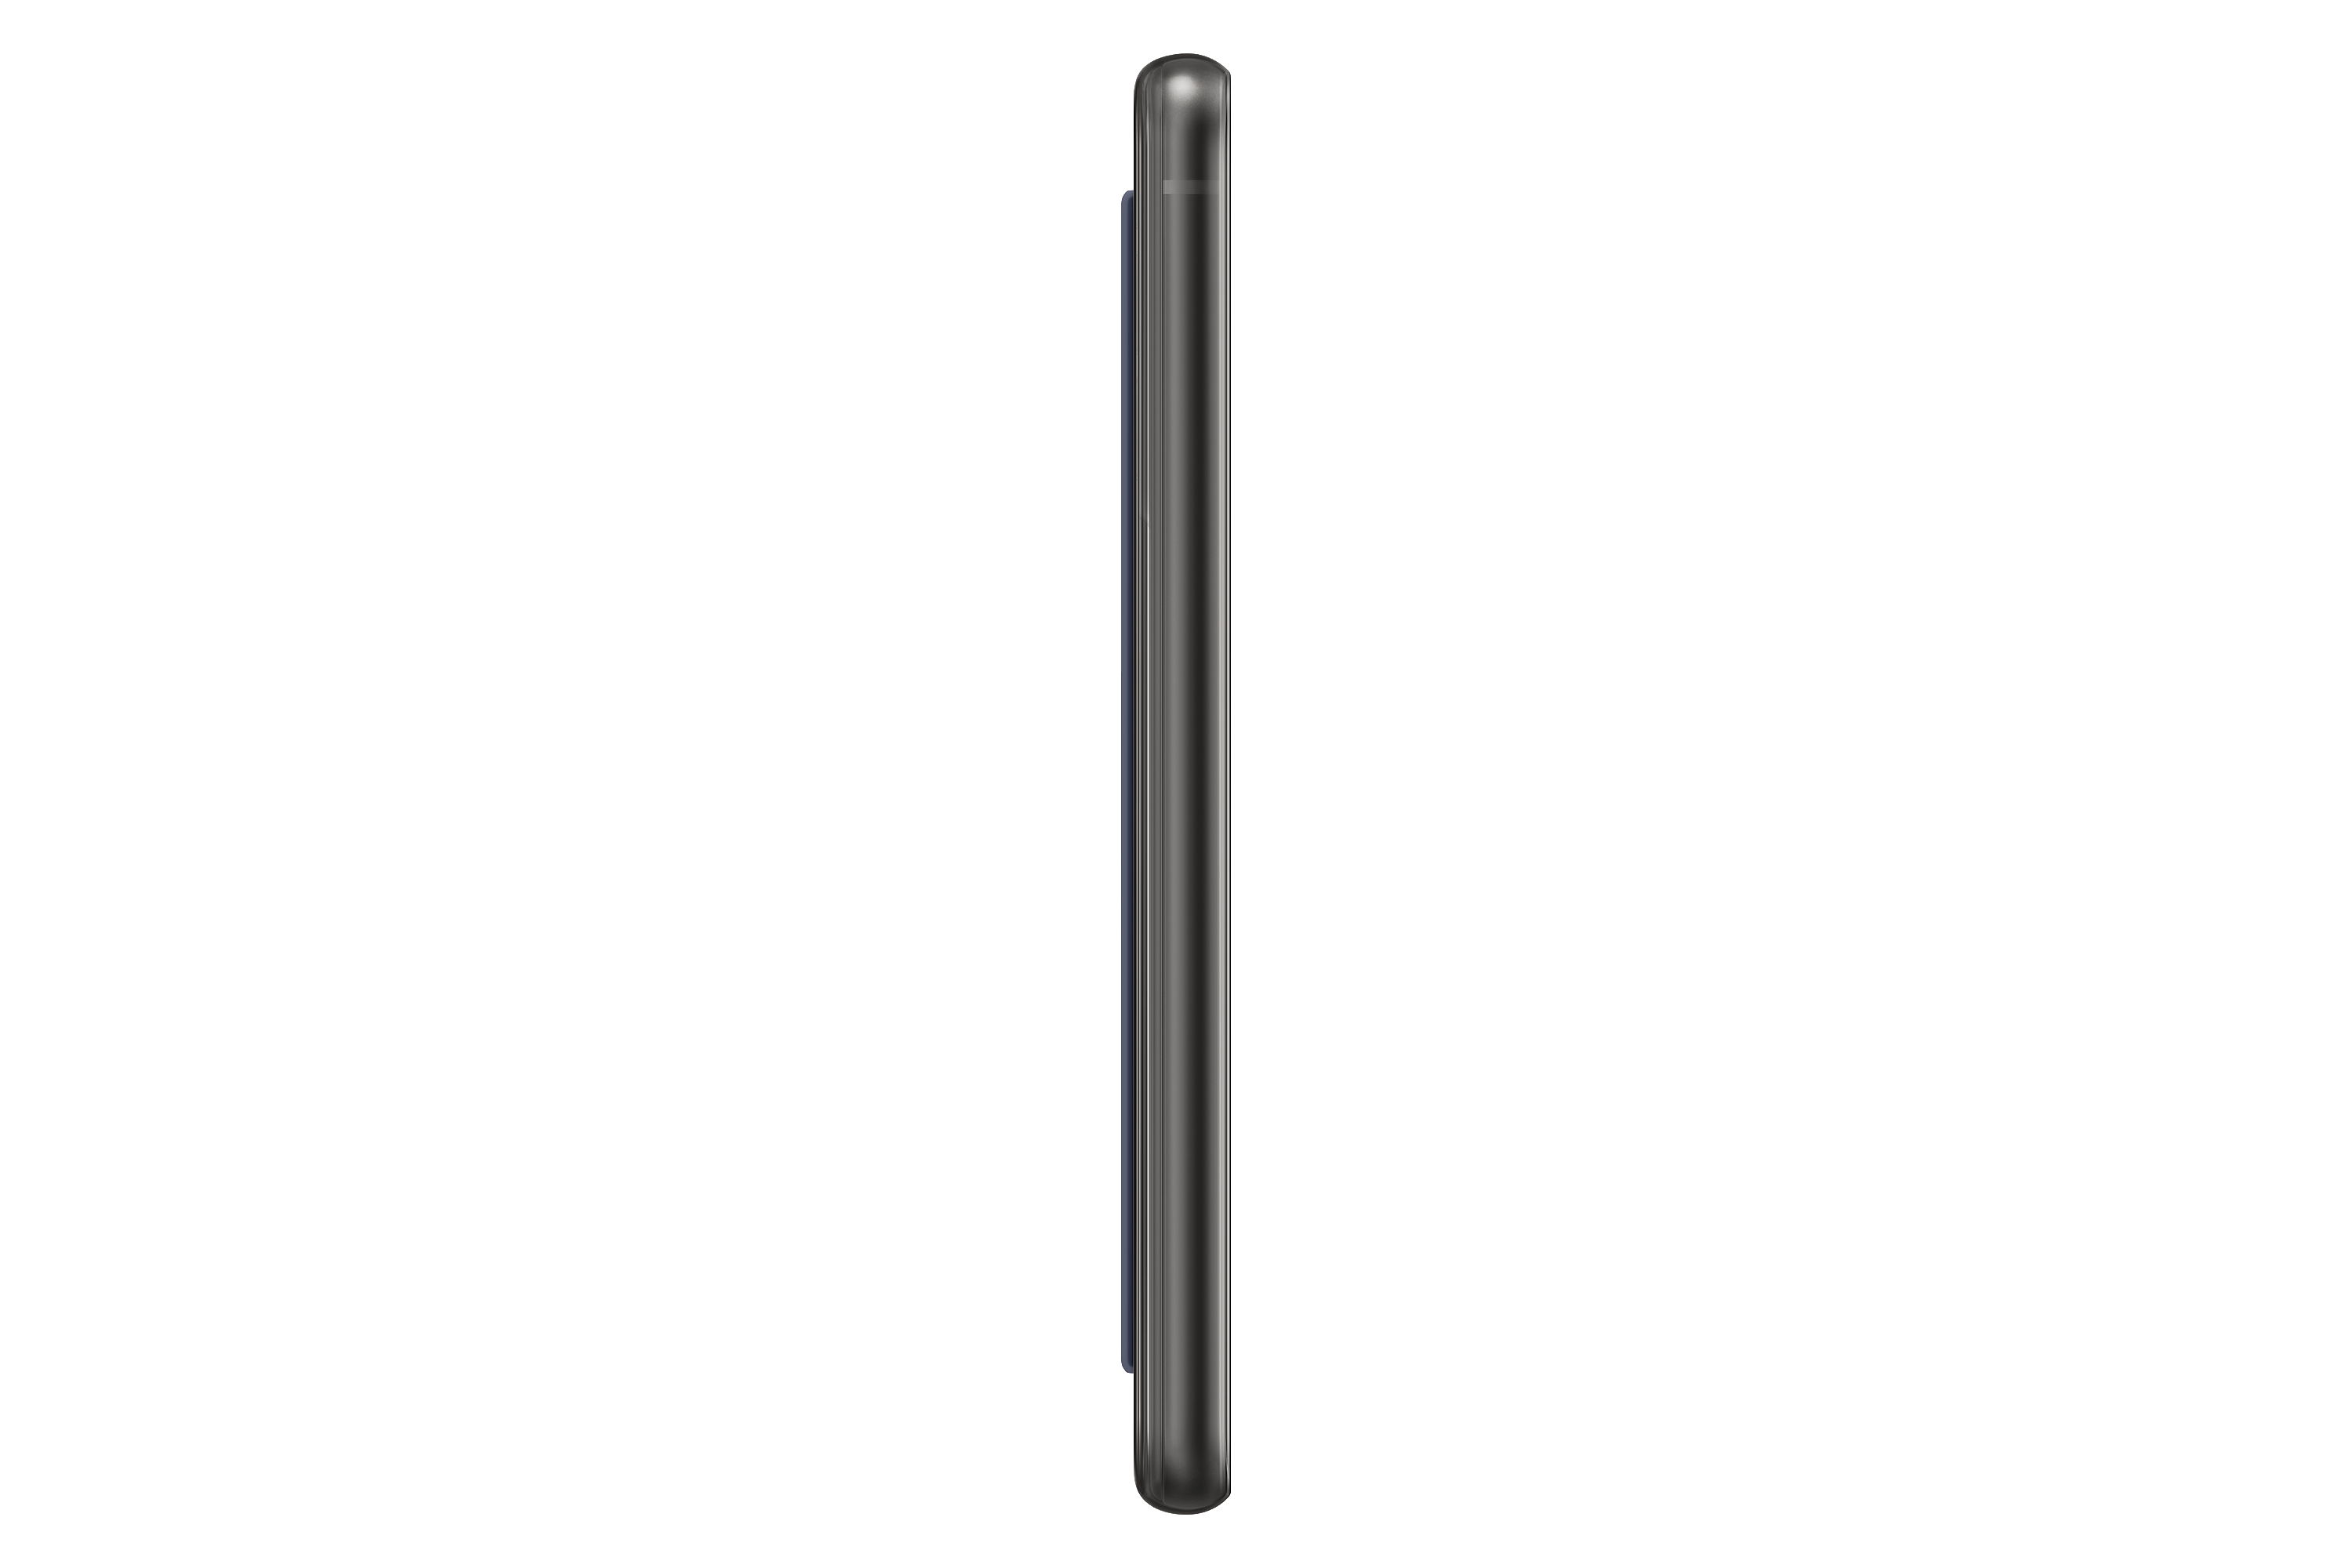 Schwarz Slim EF-XG990 5G, Strap, Backcover, FE Samsung, SAMSUNG S21 Galaxy